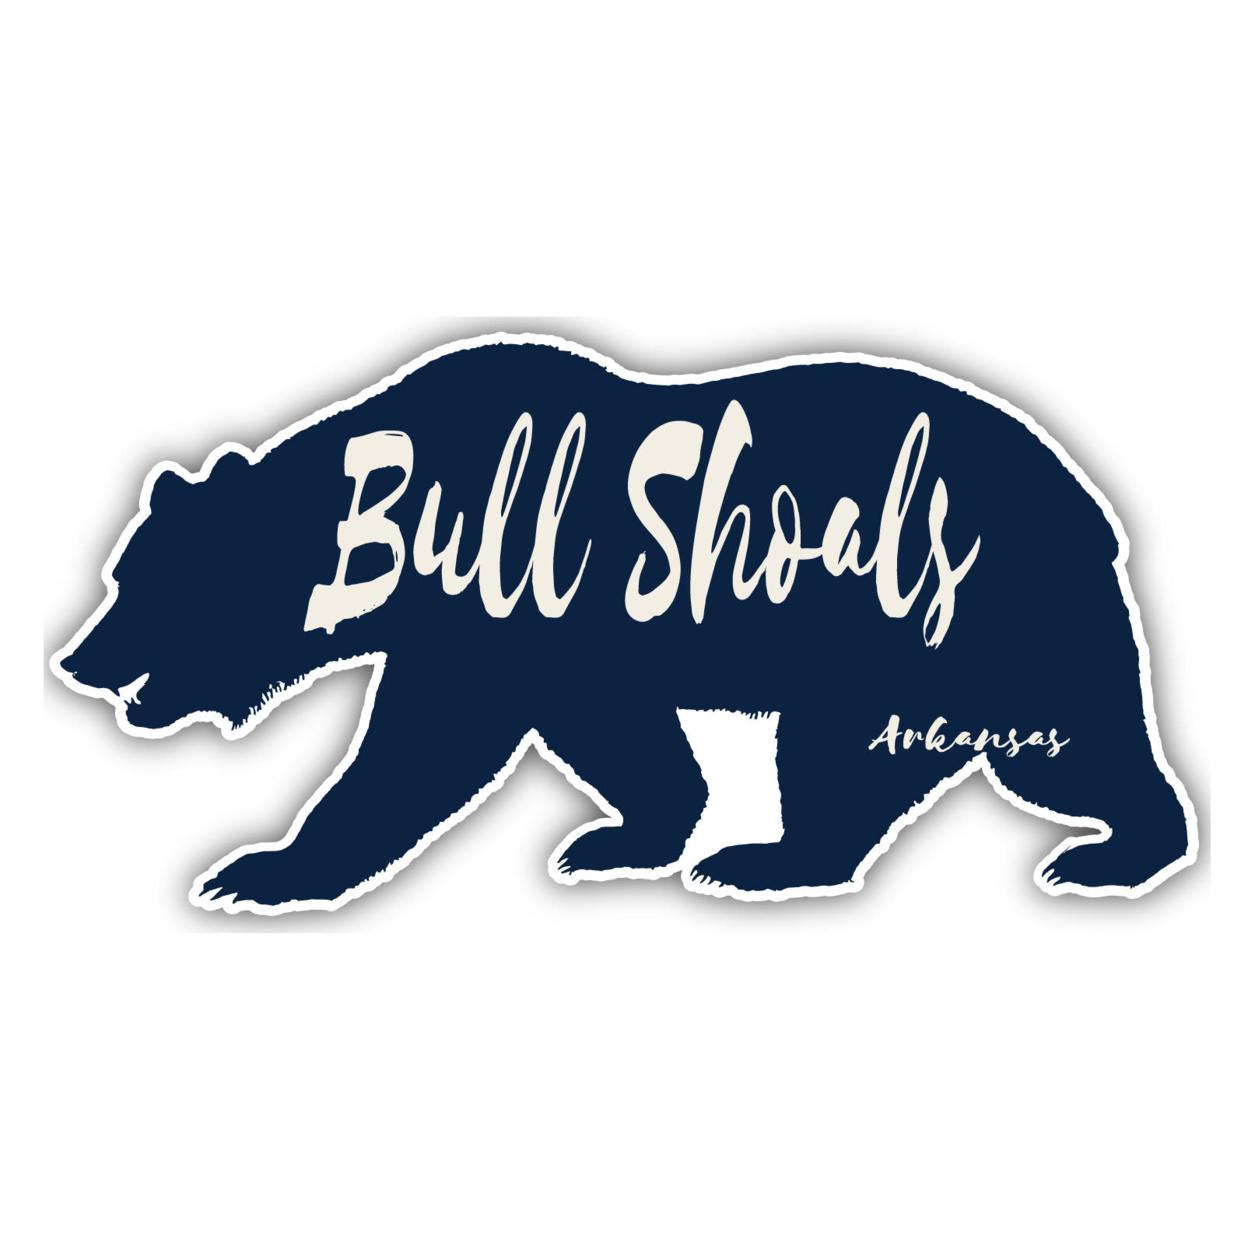 Bull Shoals Arkansas Souvenir Decorative Stickers (Choose Theme And Size) - 4-Pack, 12-Inch, Bear